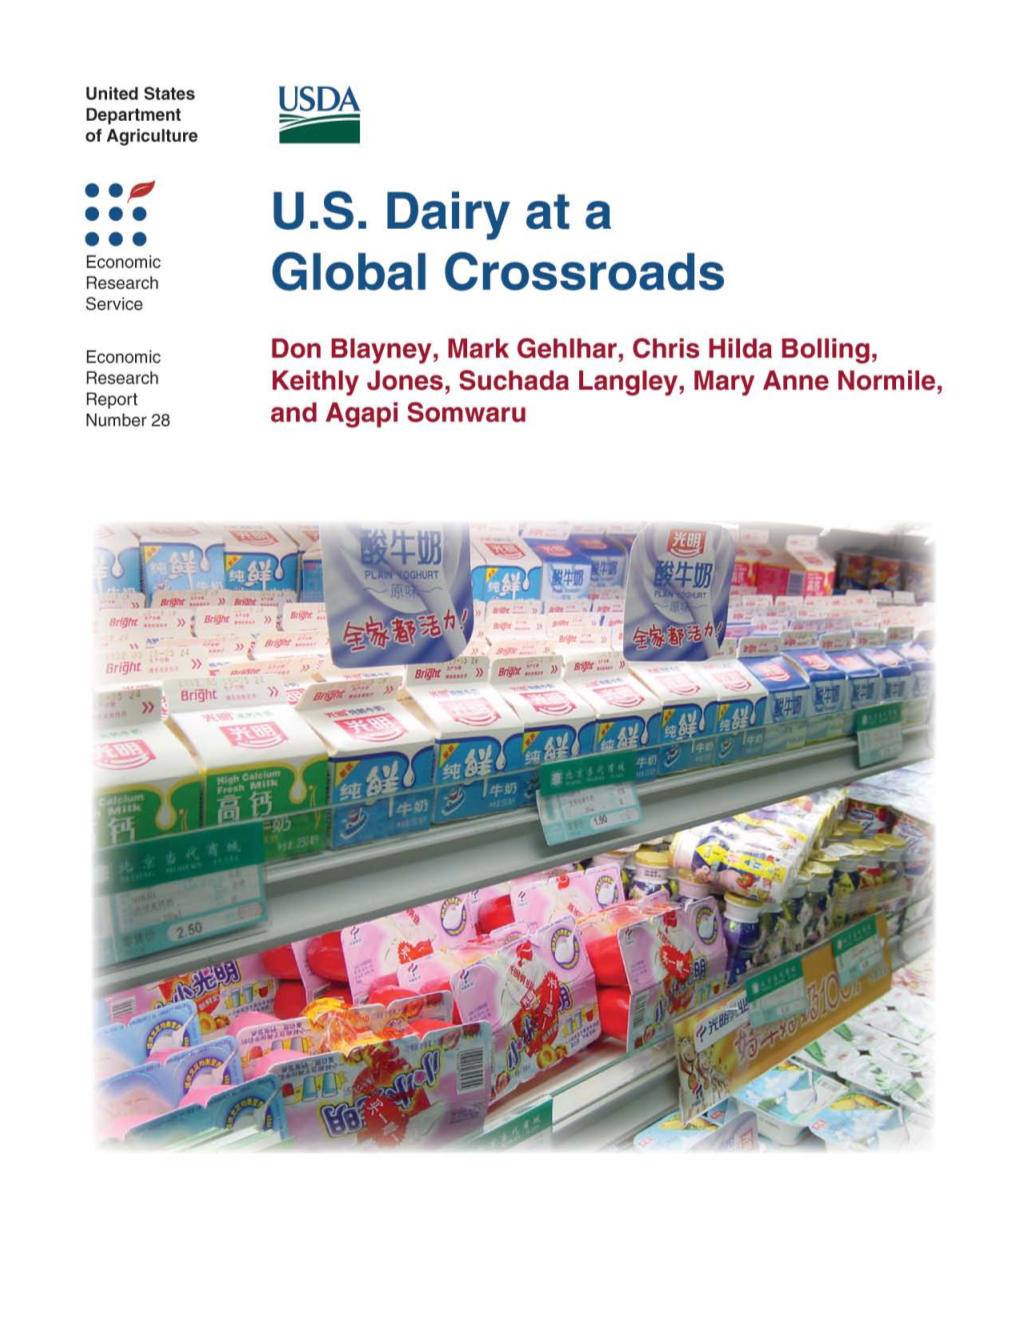 U.S. Dairy at a Global Crossroads